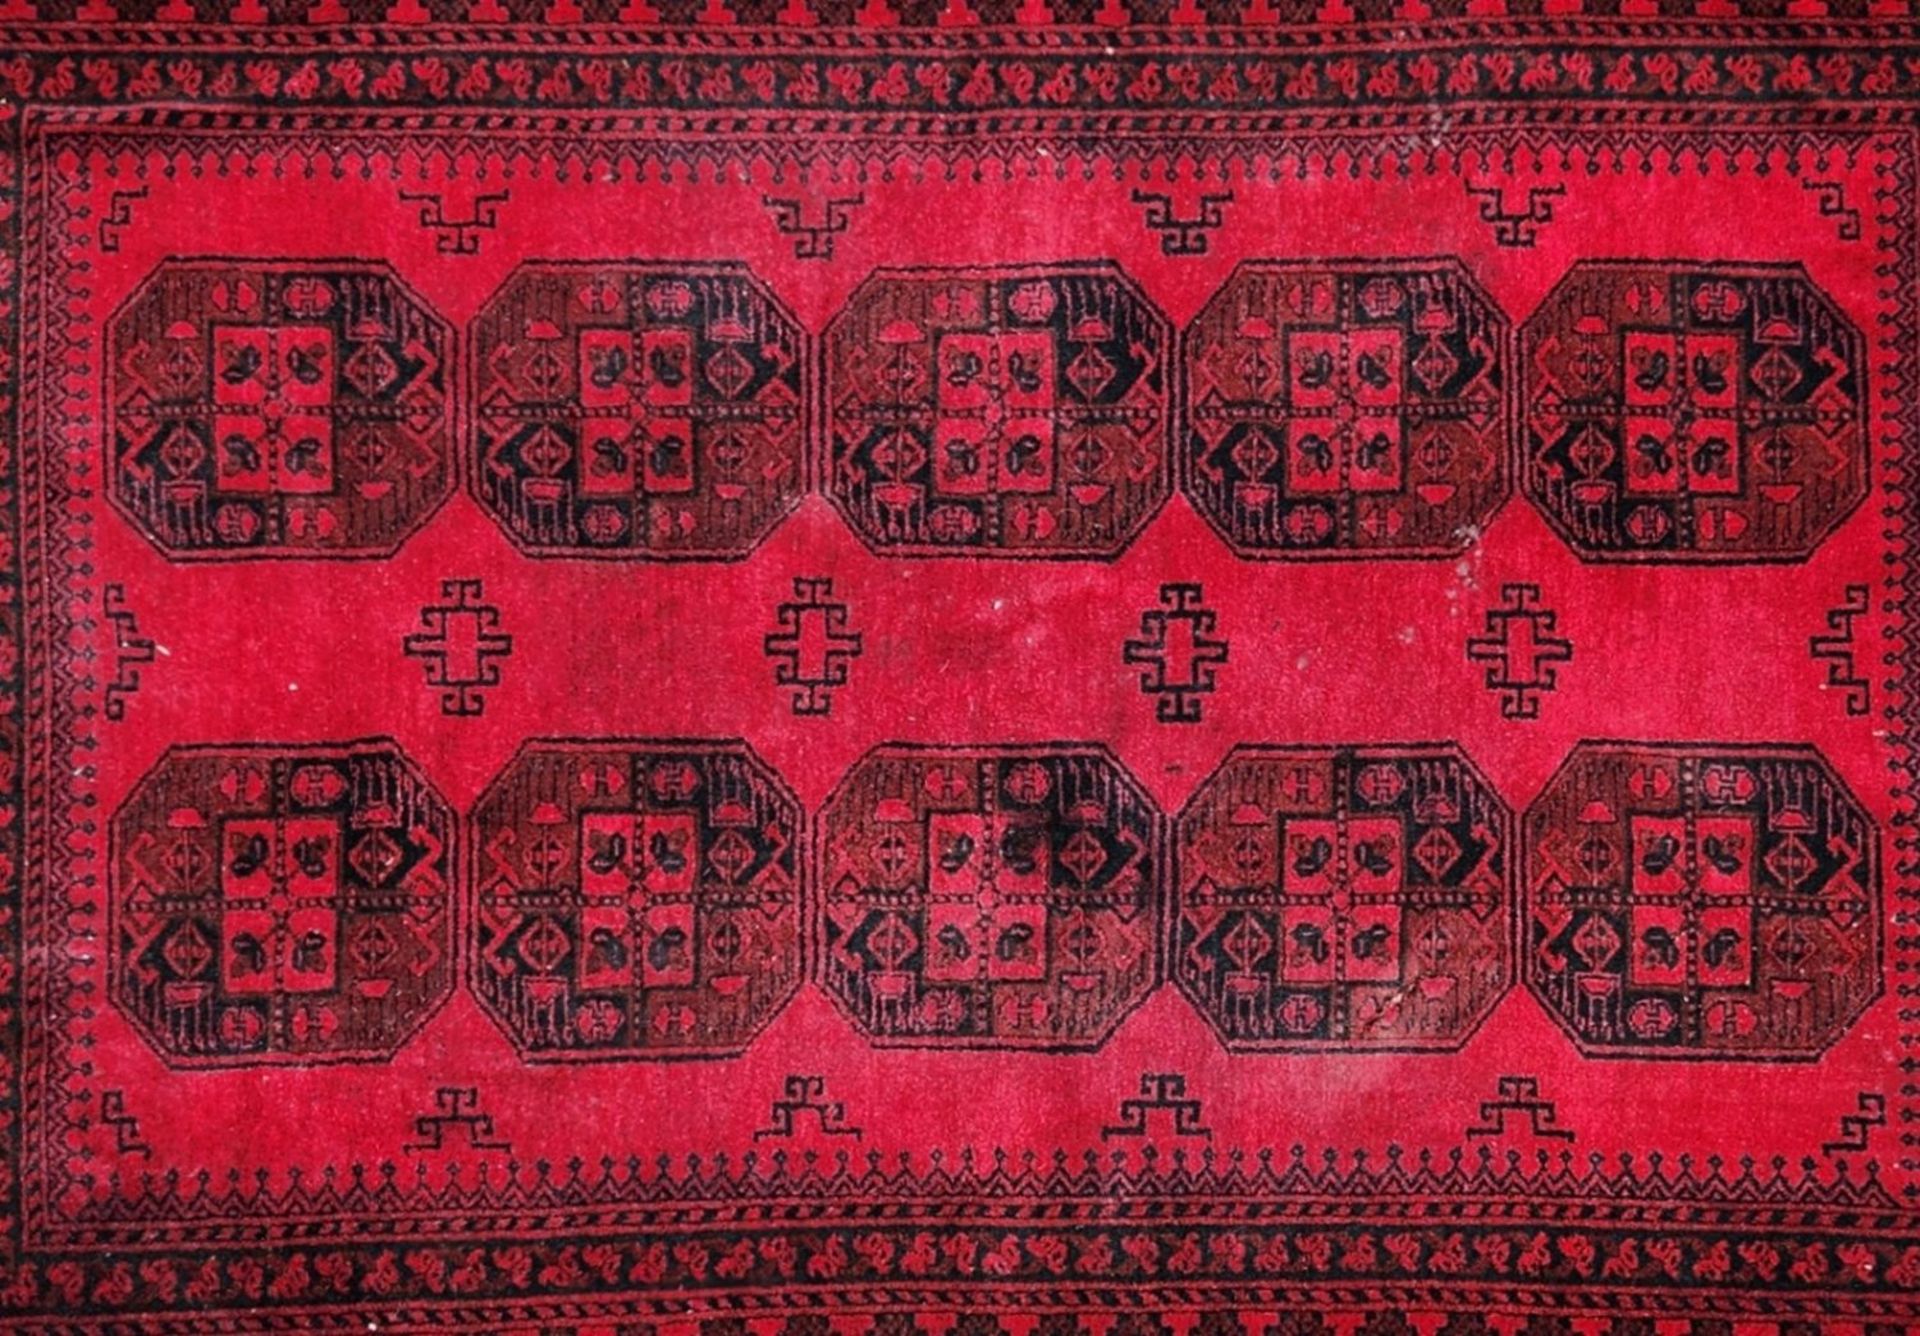 Handmade carpet, carpet size: 208X137 cm. - Image 2 of 3